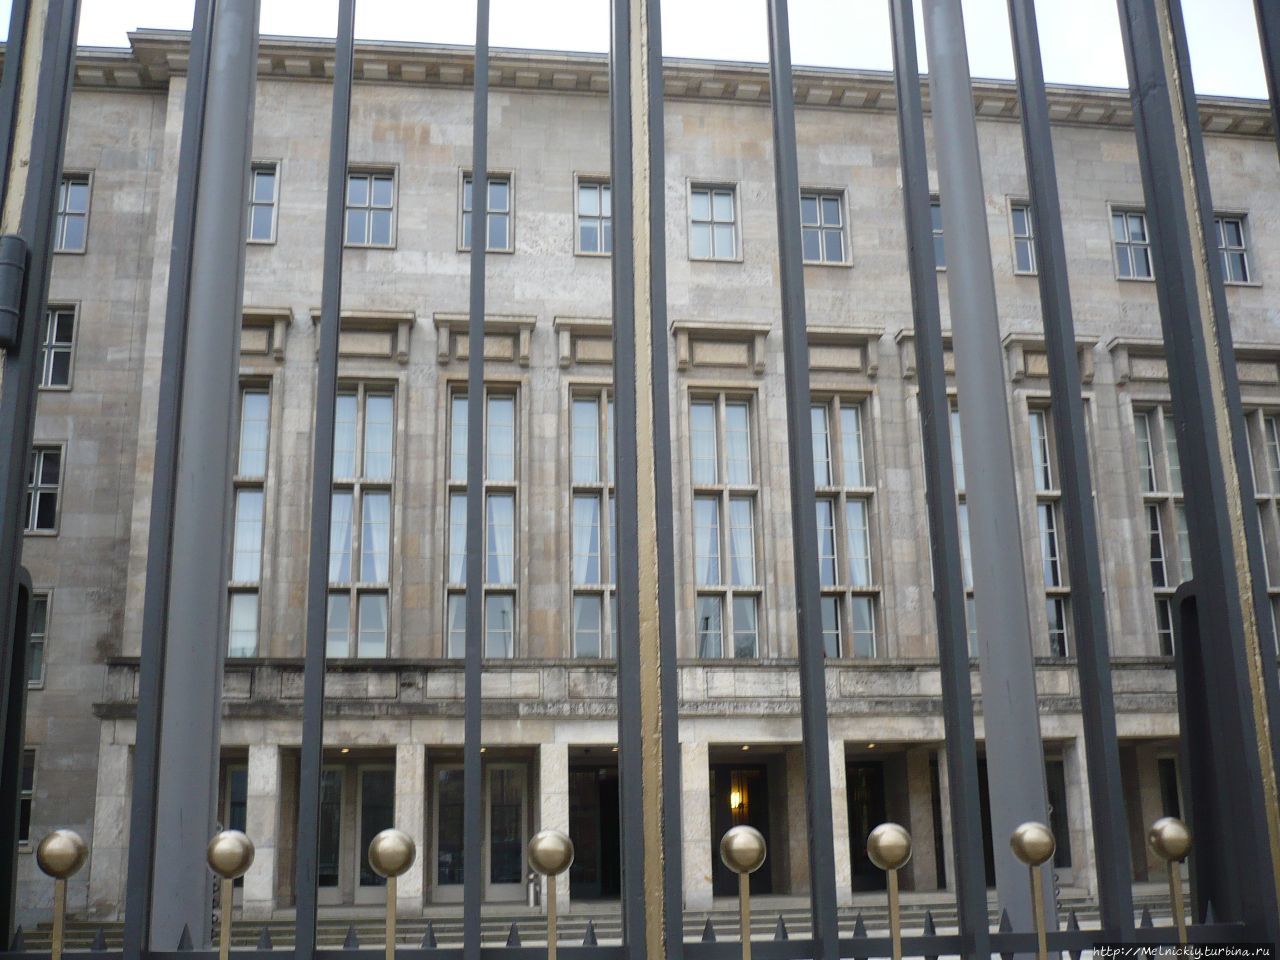 Здание Министерства финансов Германии / The building of the Ministry of Finance of Germany